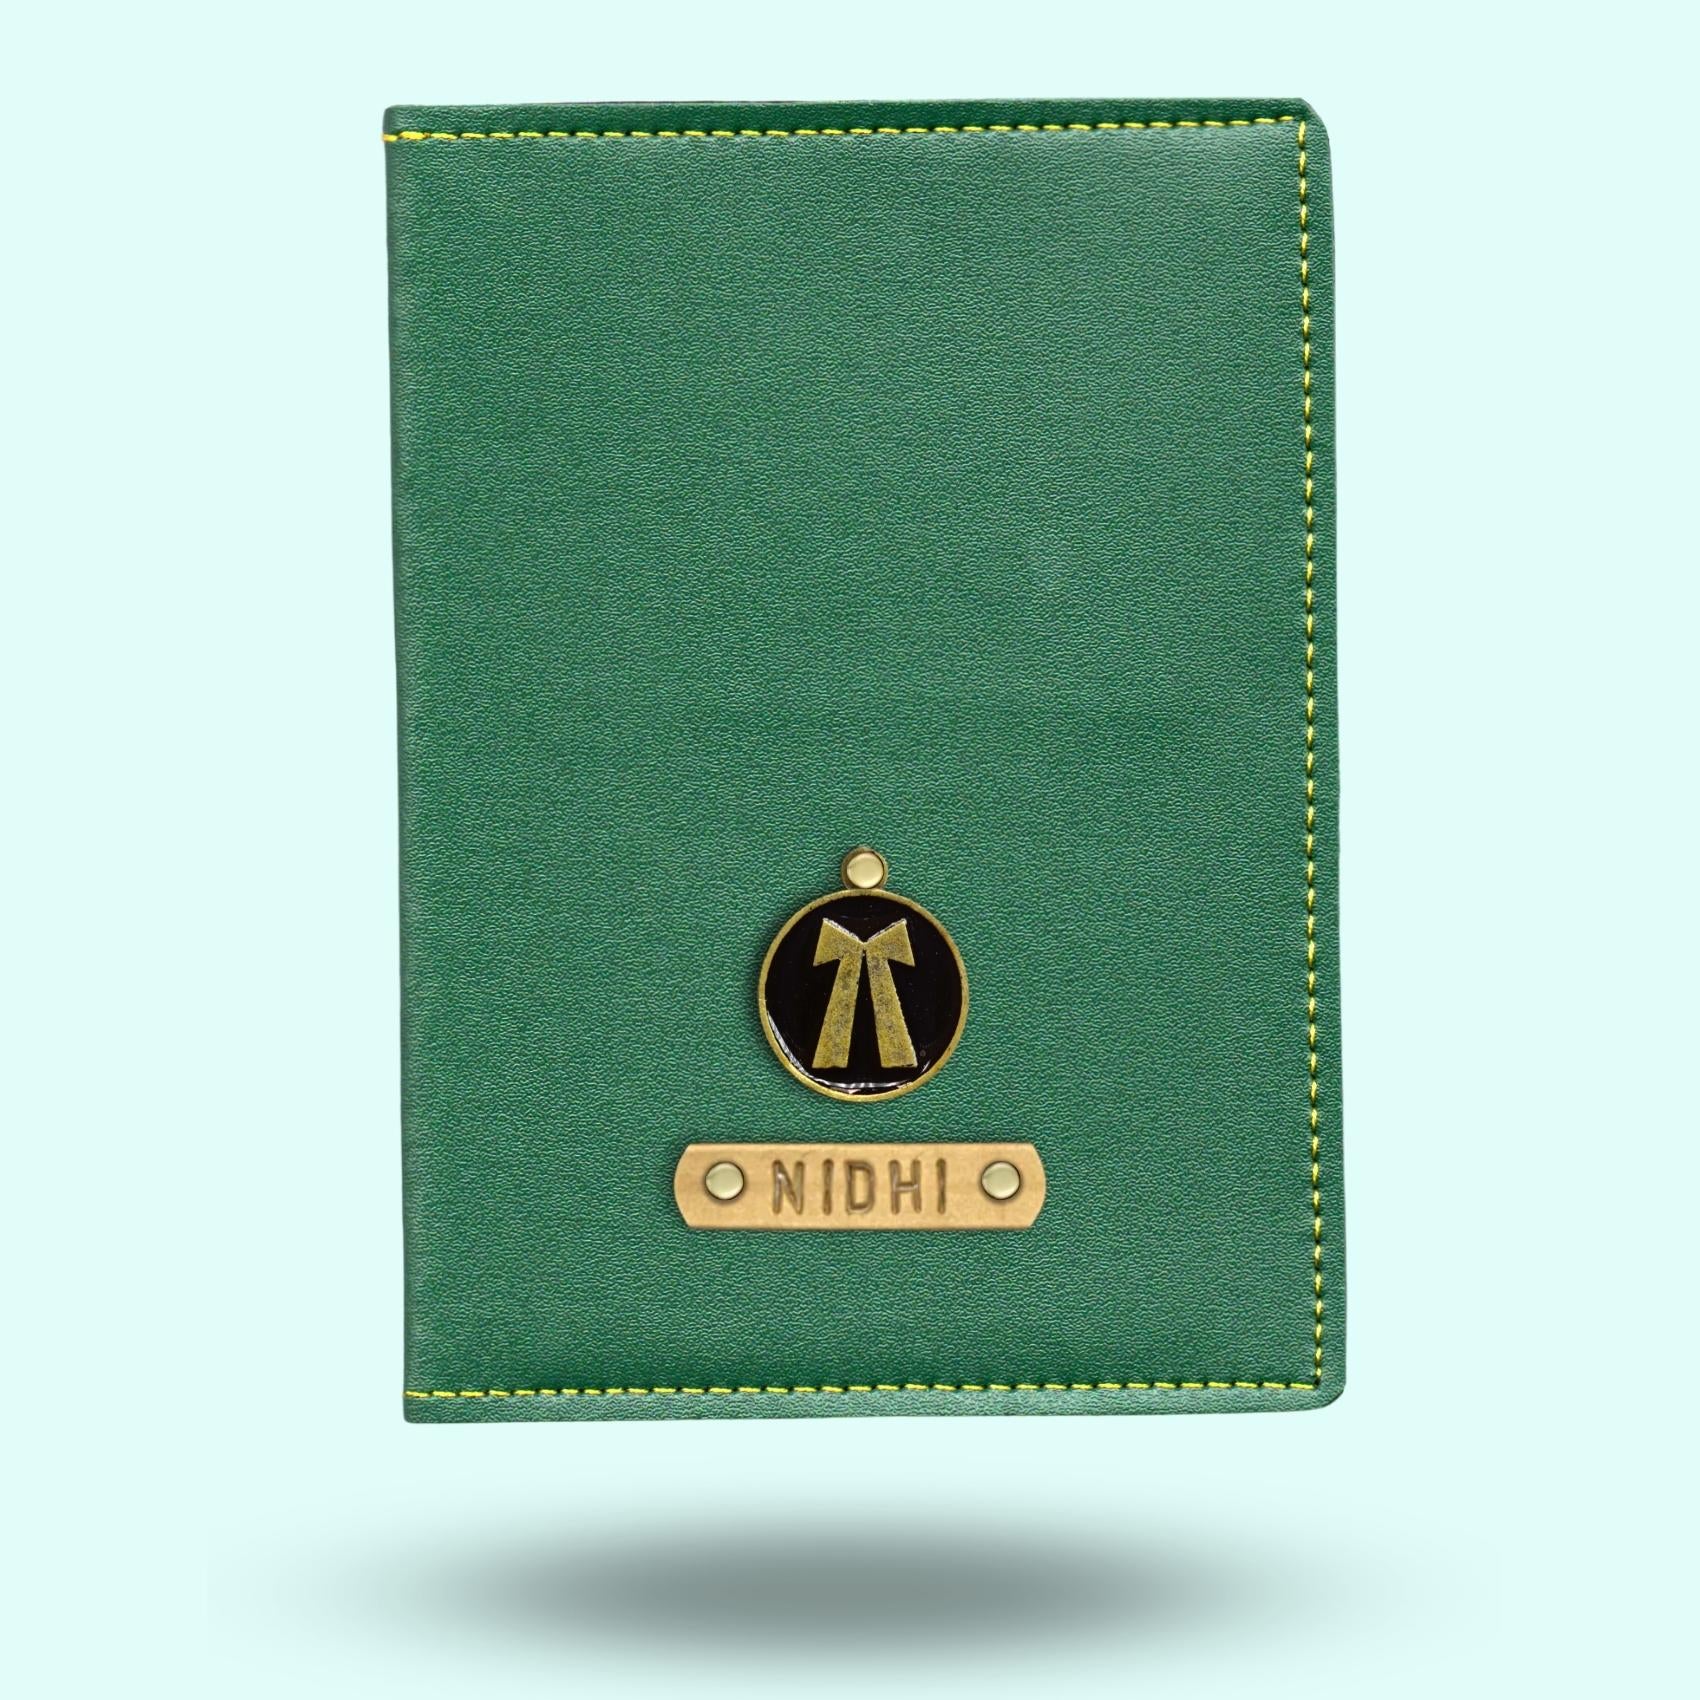 Personalized Advocate Passport Cover - Green